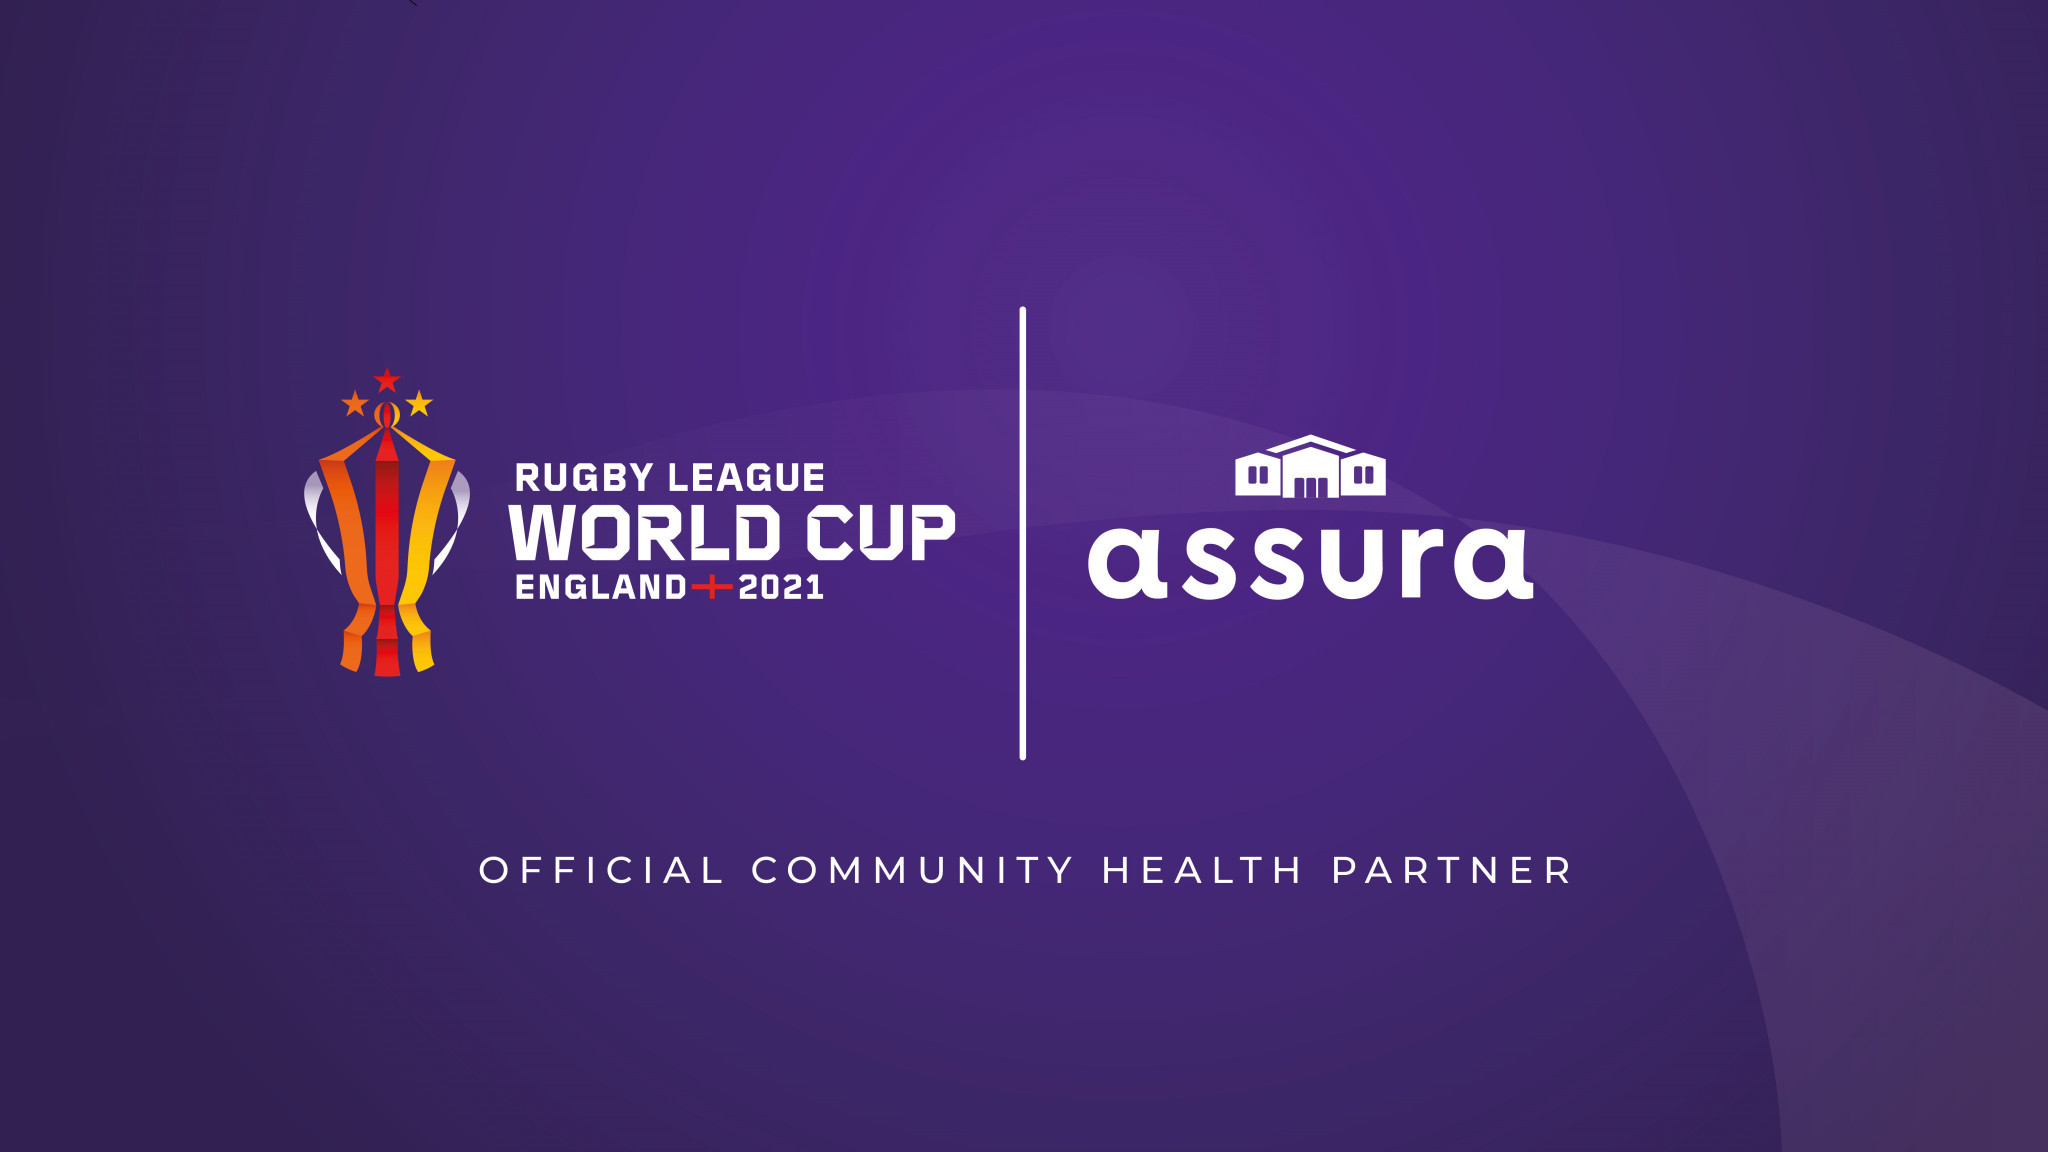 Rugby League World Cup 2021 announce Assura as community health partner